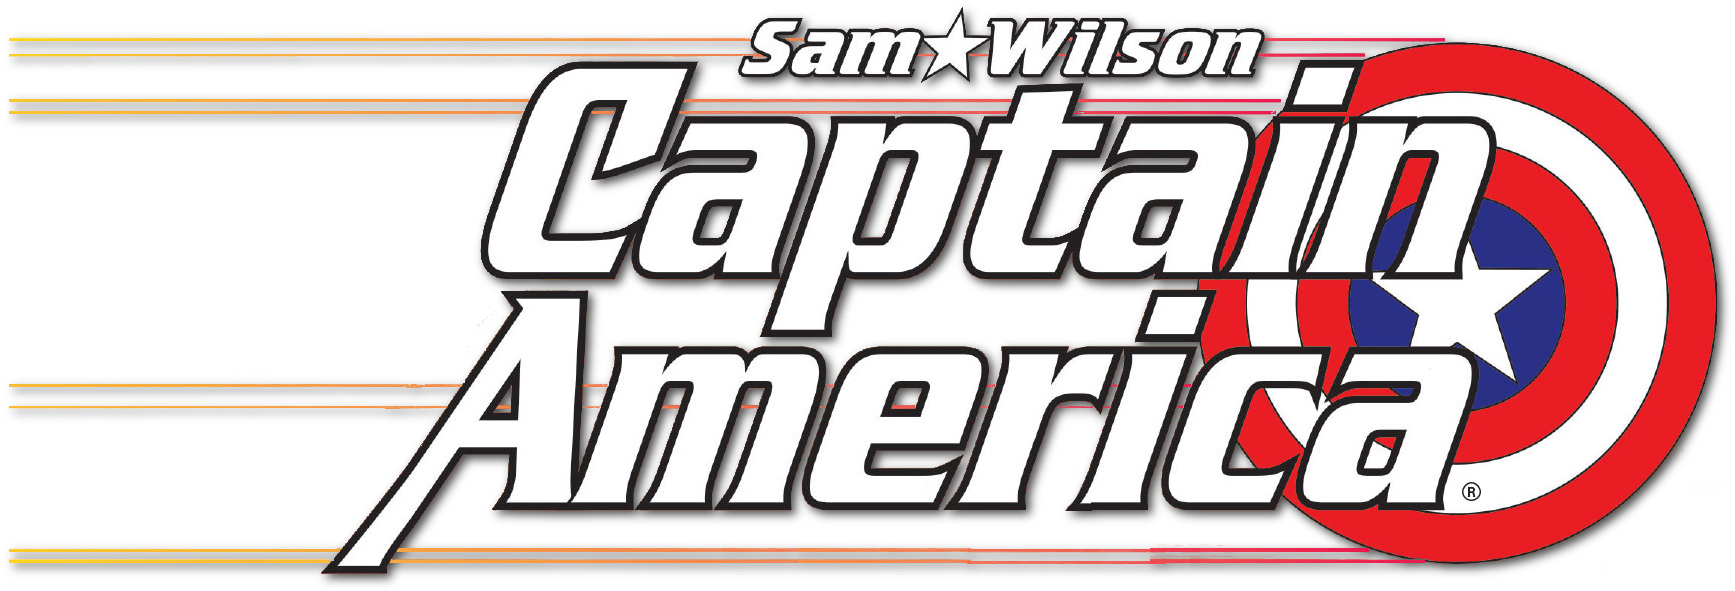 Sam Wilson Vol 1 - Captain America Sam Wilson Logo (1775x611)